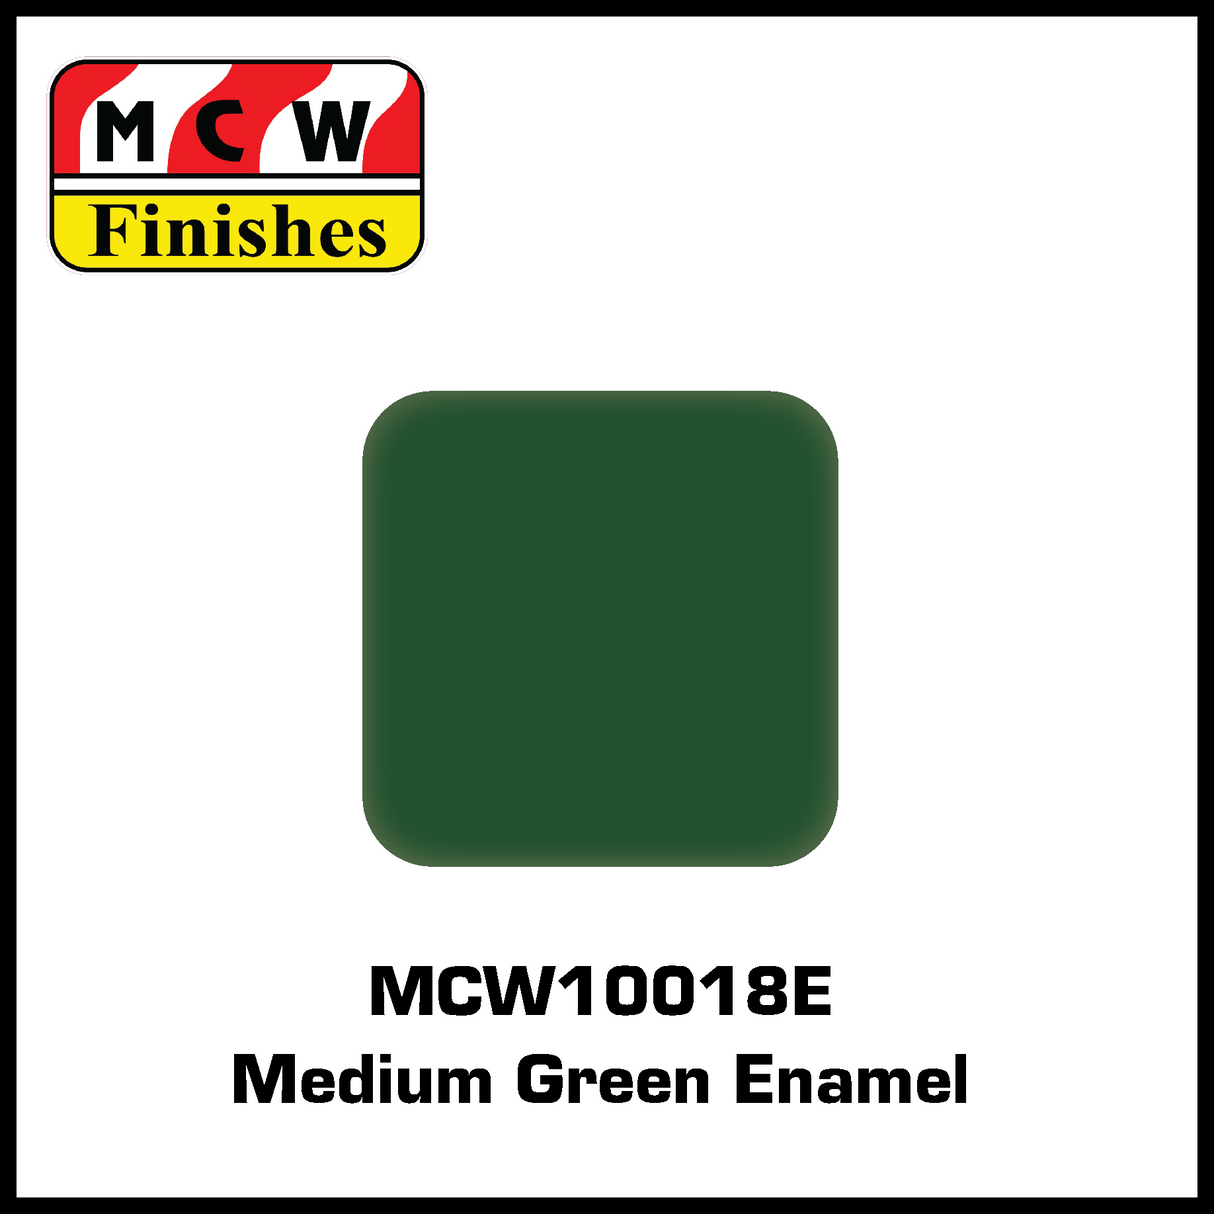 MCW Finishes Medium Green Enamel